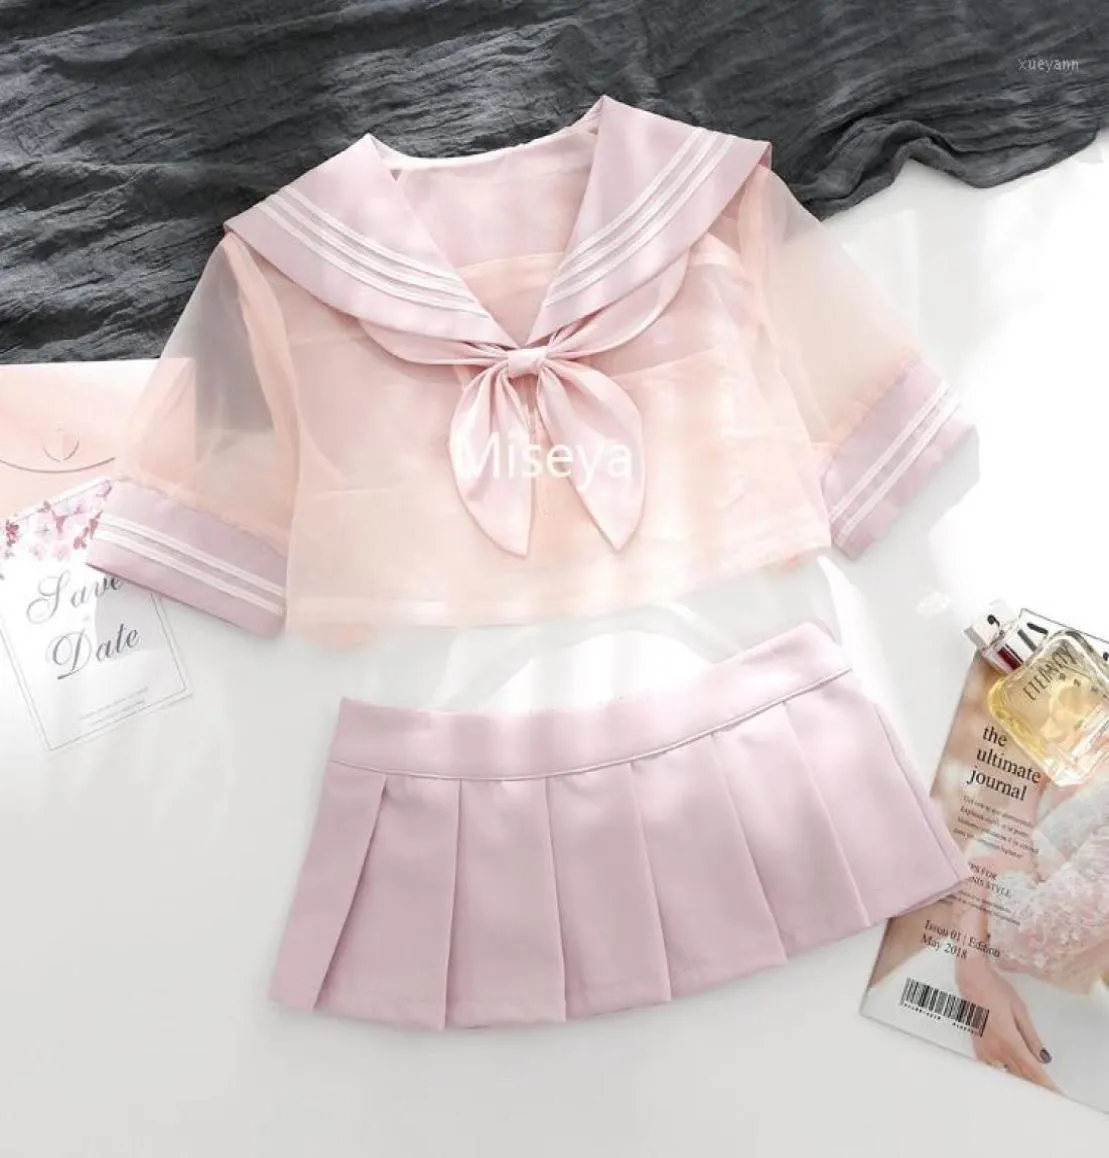 Süße rosa Seemannskleid Lolita Outfit erotische japanische Dessous Kostüm -Schulmädchen Uniform sexy Kawaii Dessous Unterwäsche Set17899388